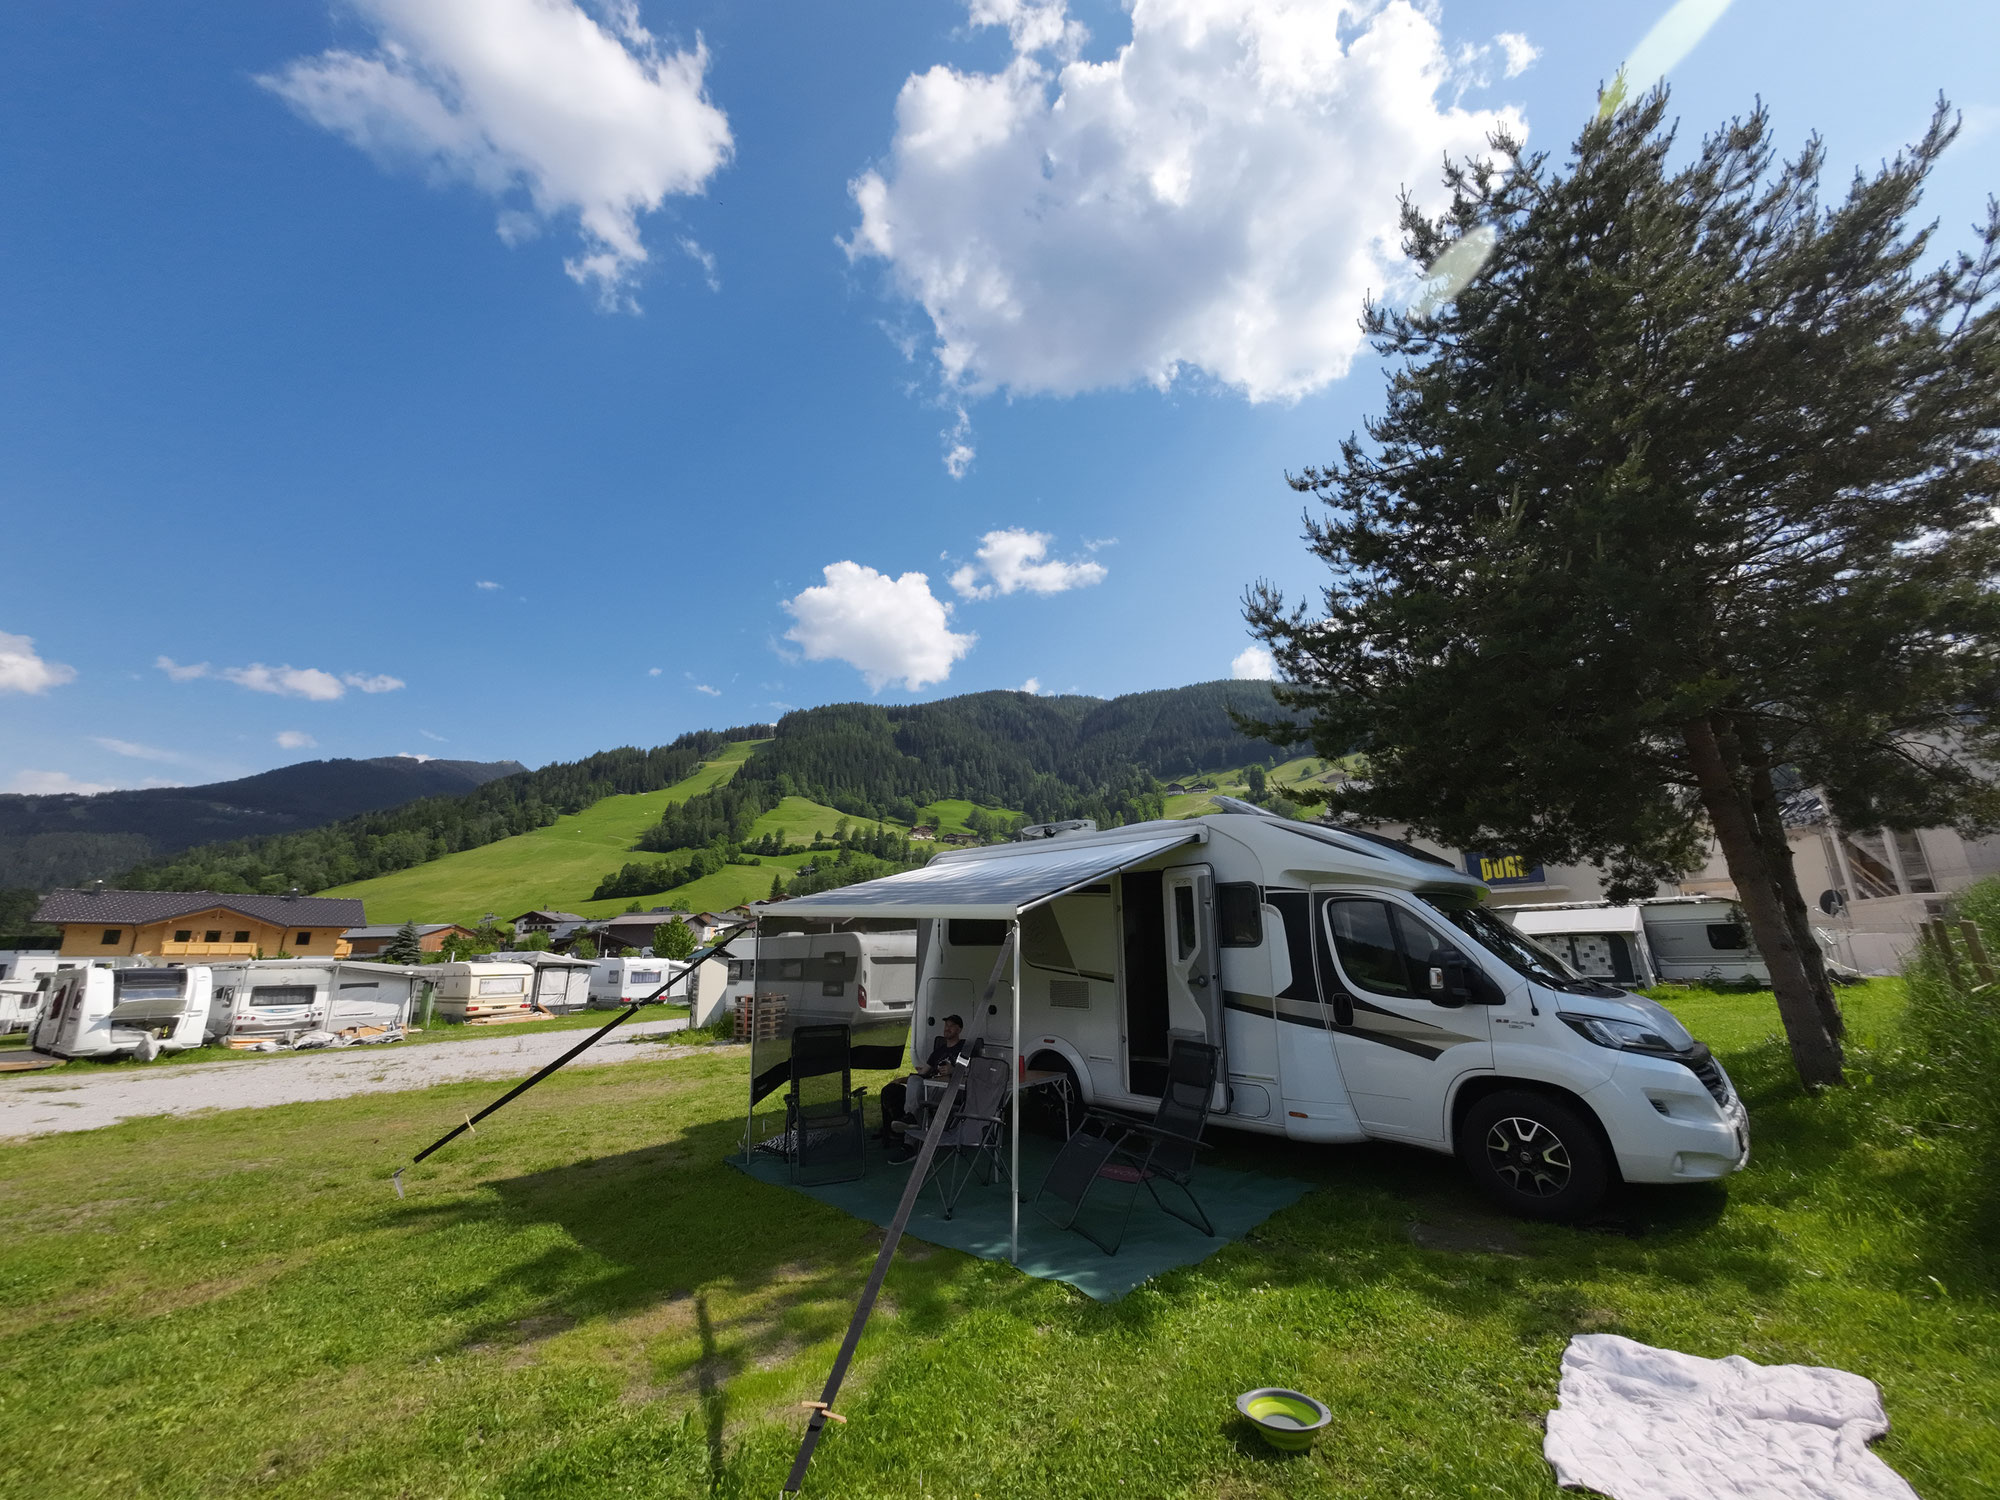 Camping "Reiteralm" in Schladming